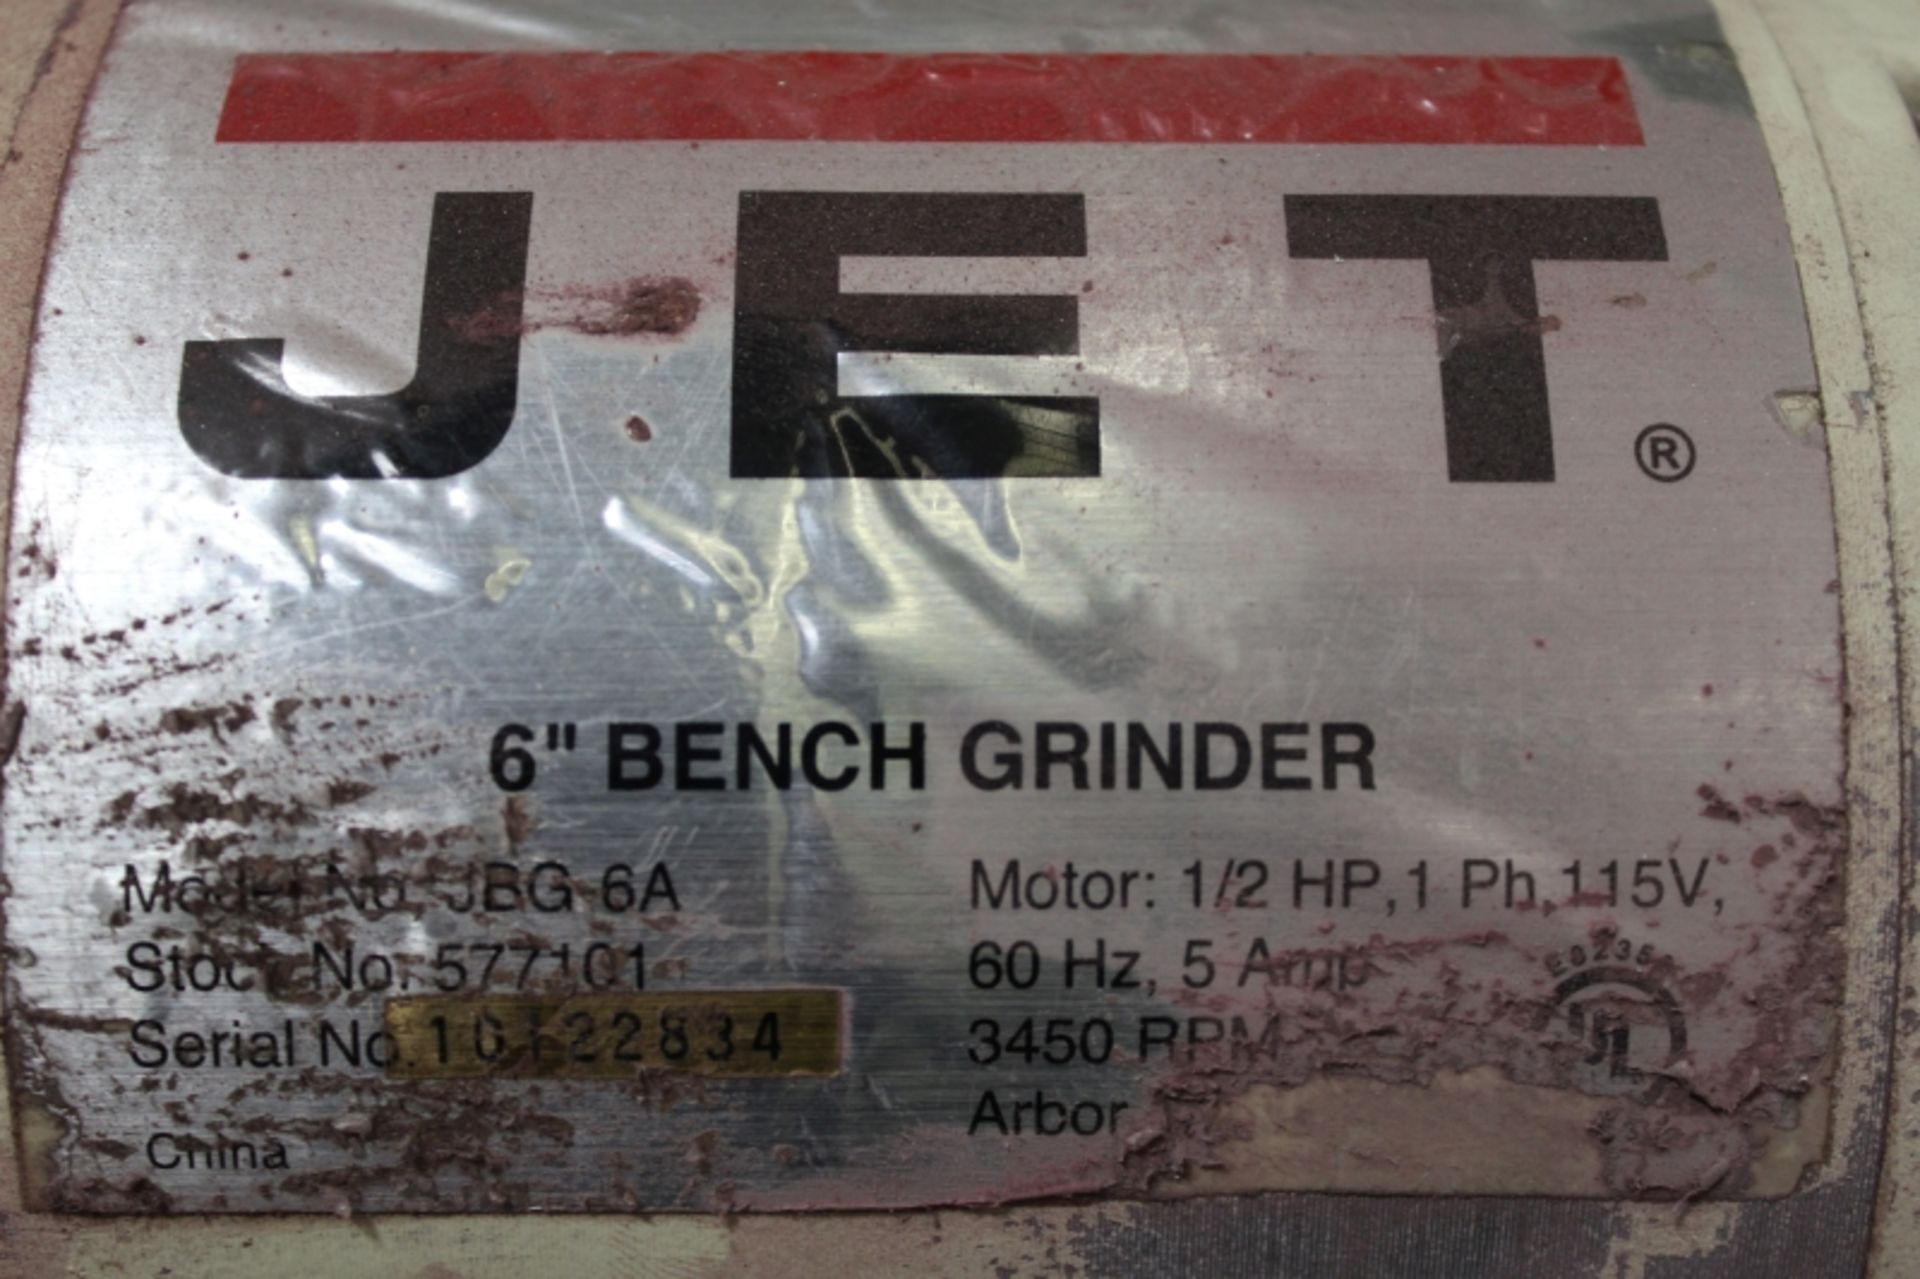 Jet Jbg-6A 6" Double End Bench Grinder S/N 10122834 - Image 4 of 4